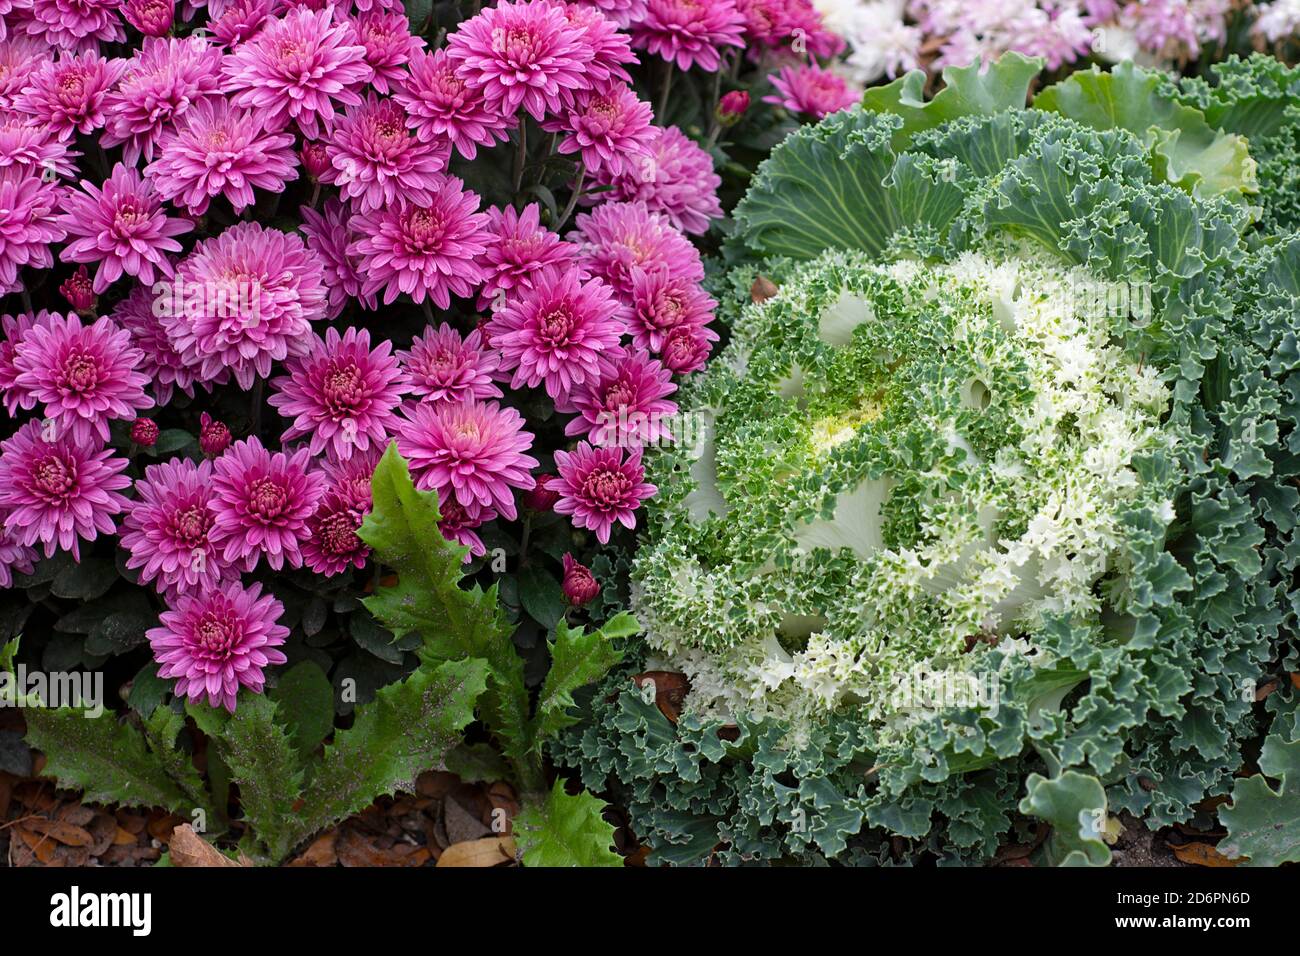 Pink Chyrsanthemum and White Ornamental Flowering Kale Growing in garden, Autumn Flowers, Plants, Perennials Brassica oleracea Stock Photo